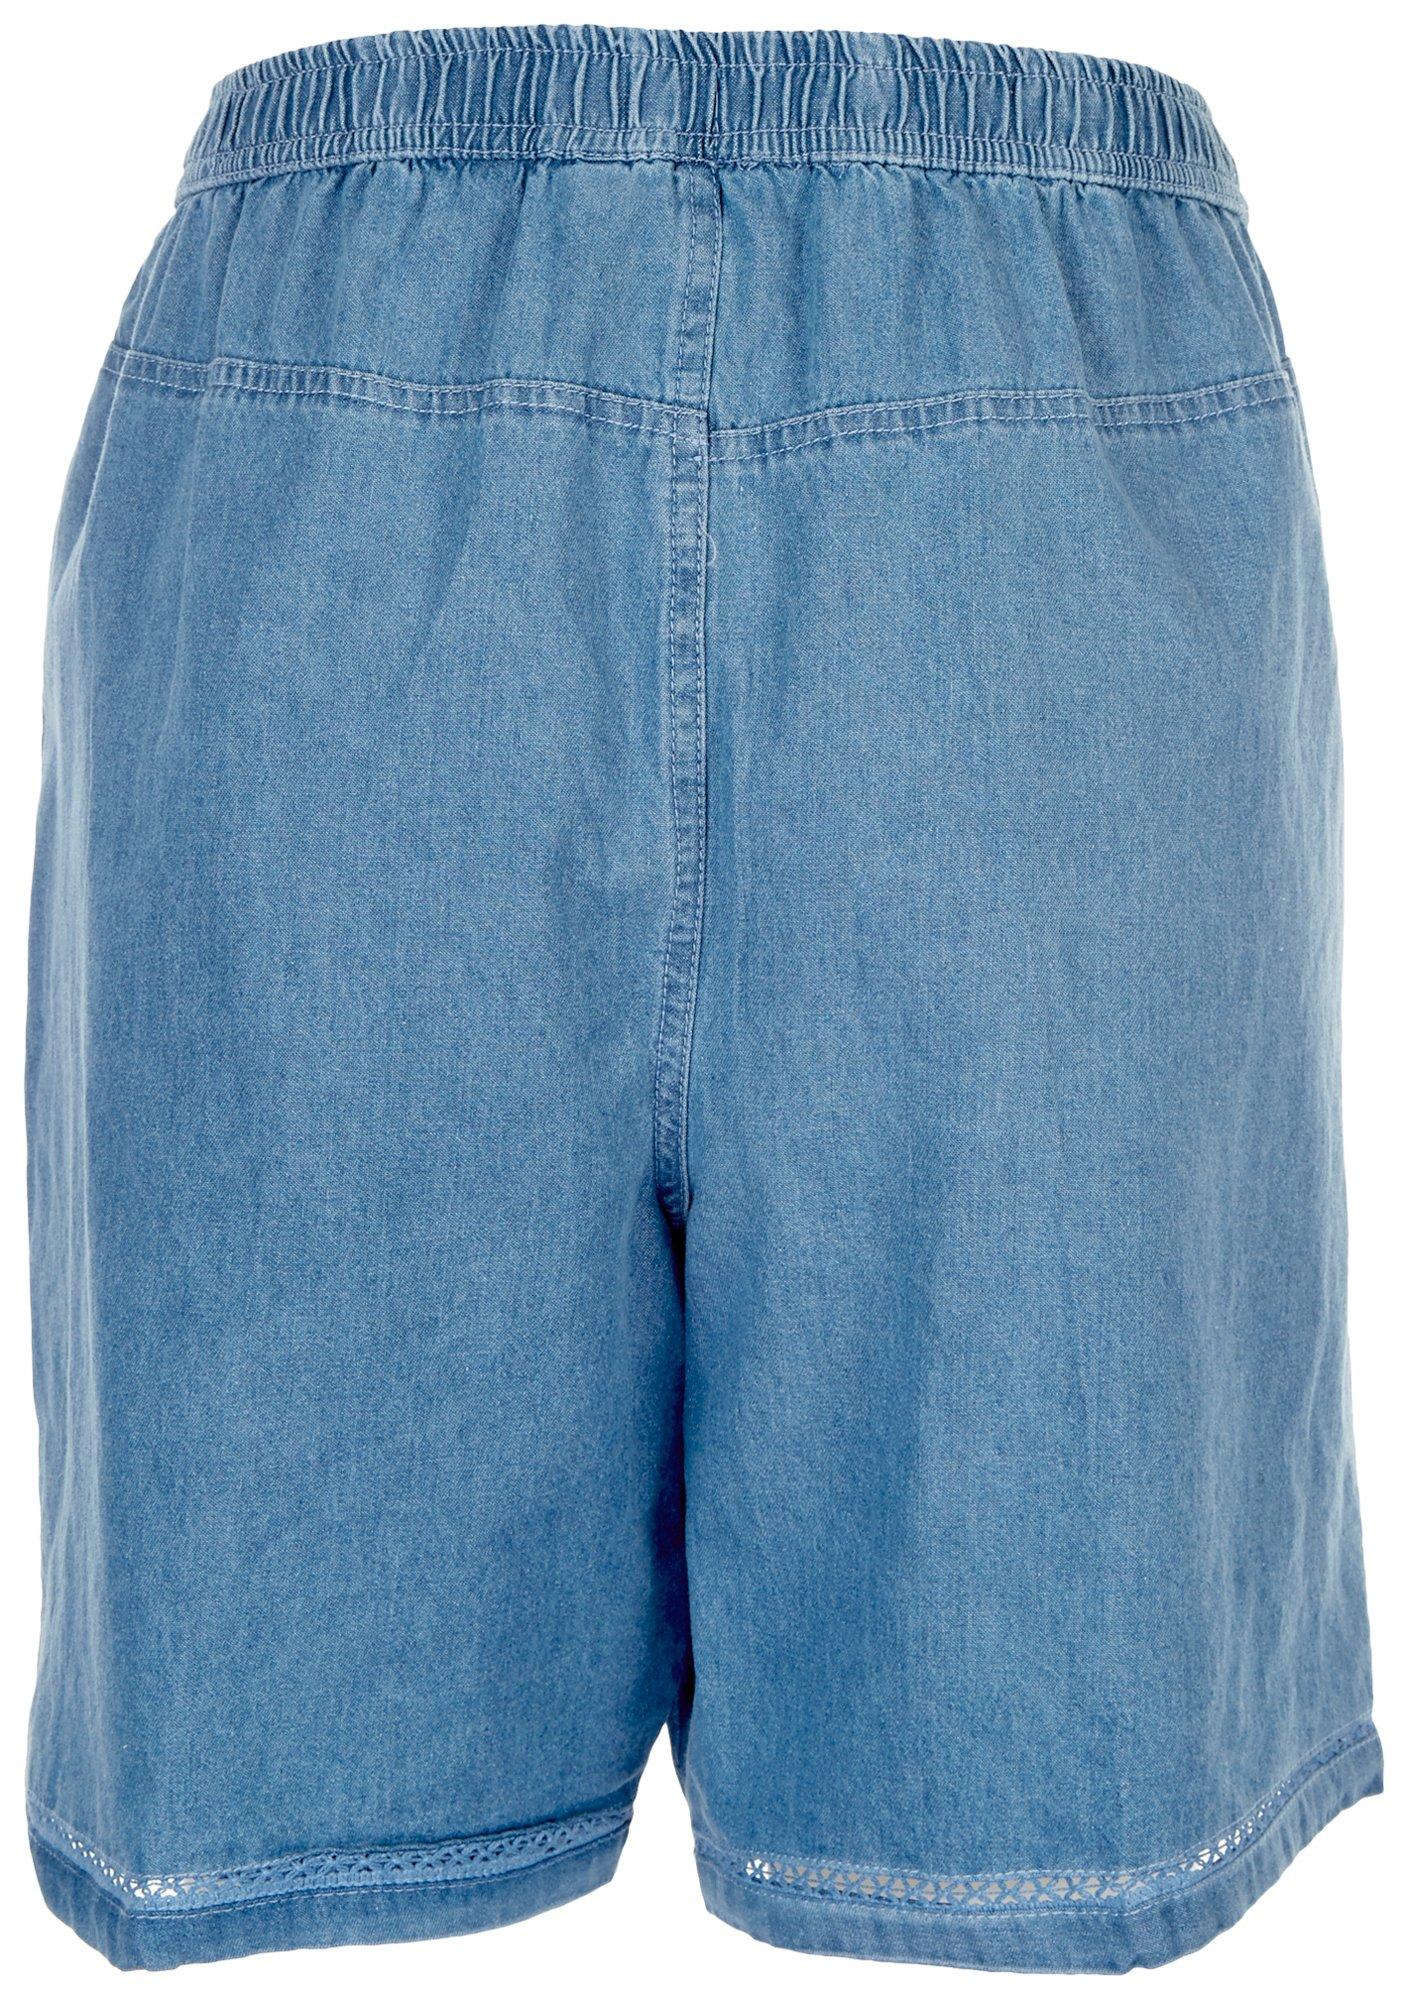 Emily Daniels Petite Solid Pull On Shorts | eBay